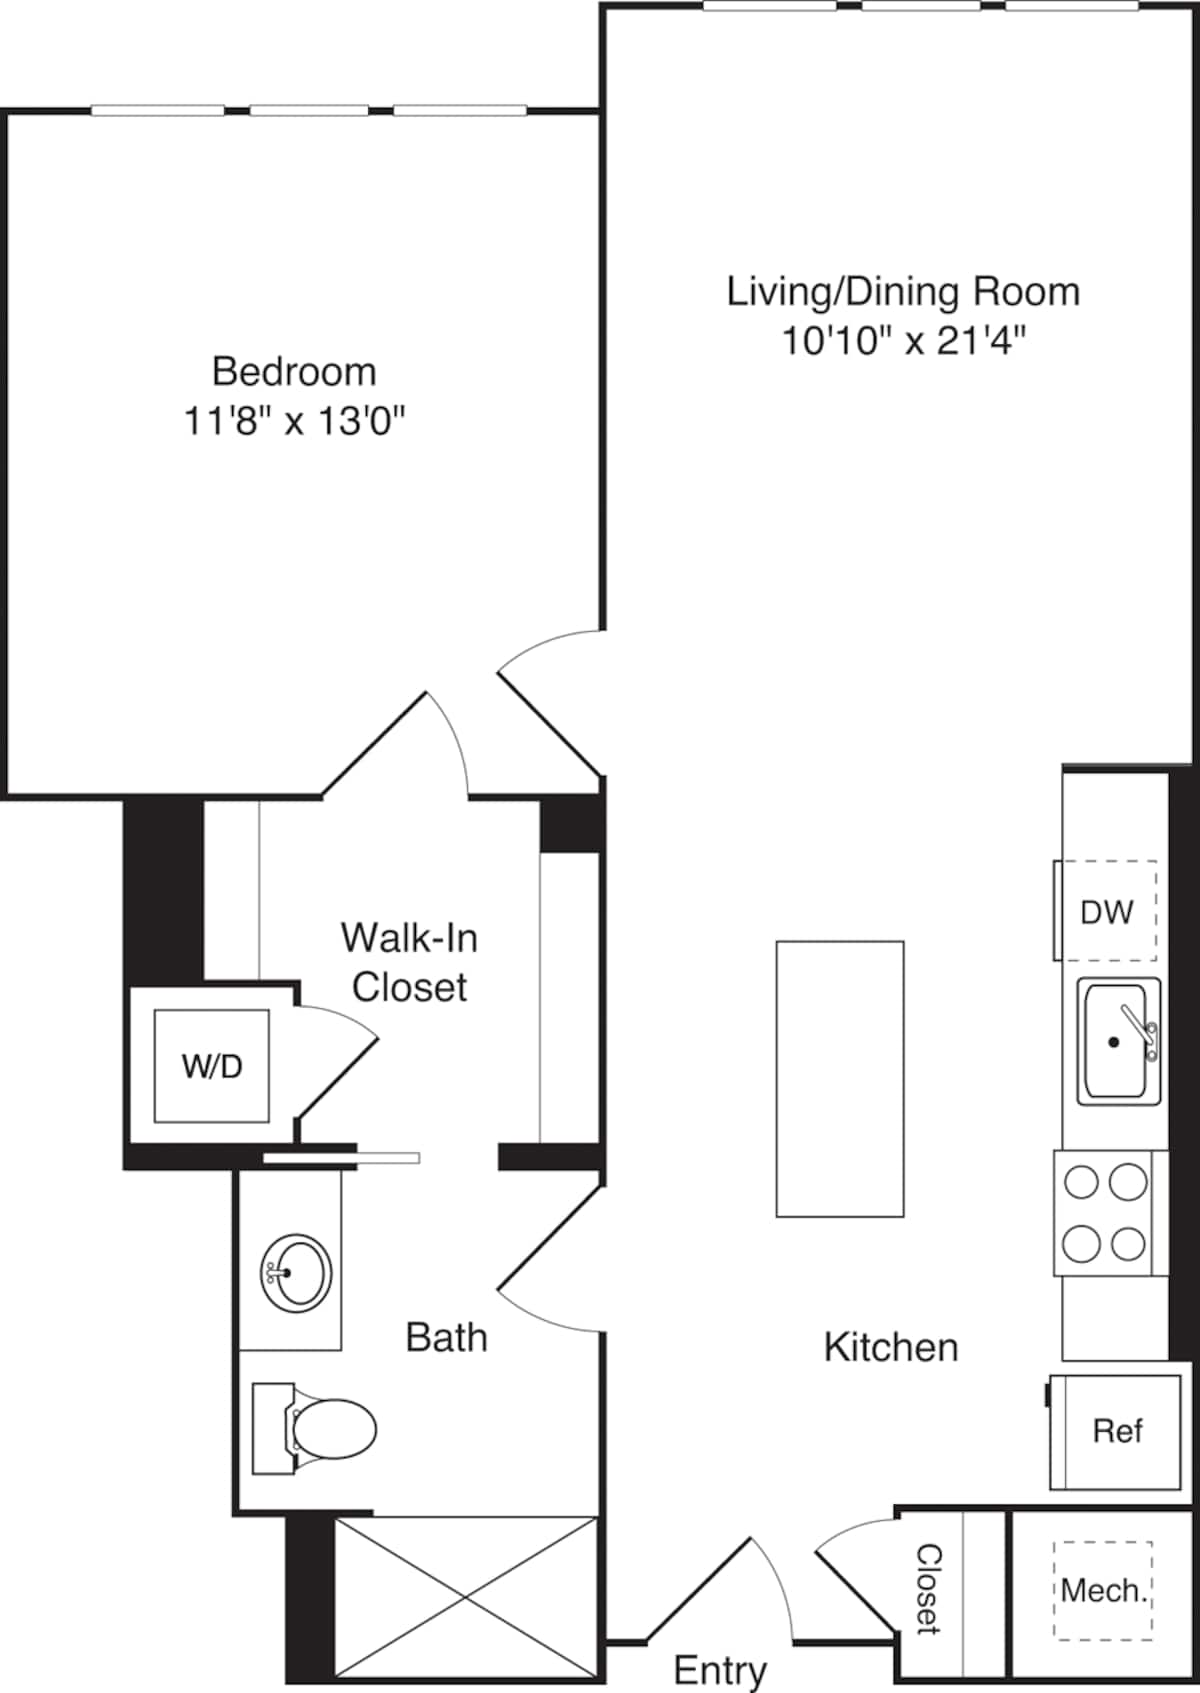 Floorplan diagram for A03, showing 1 bedroom